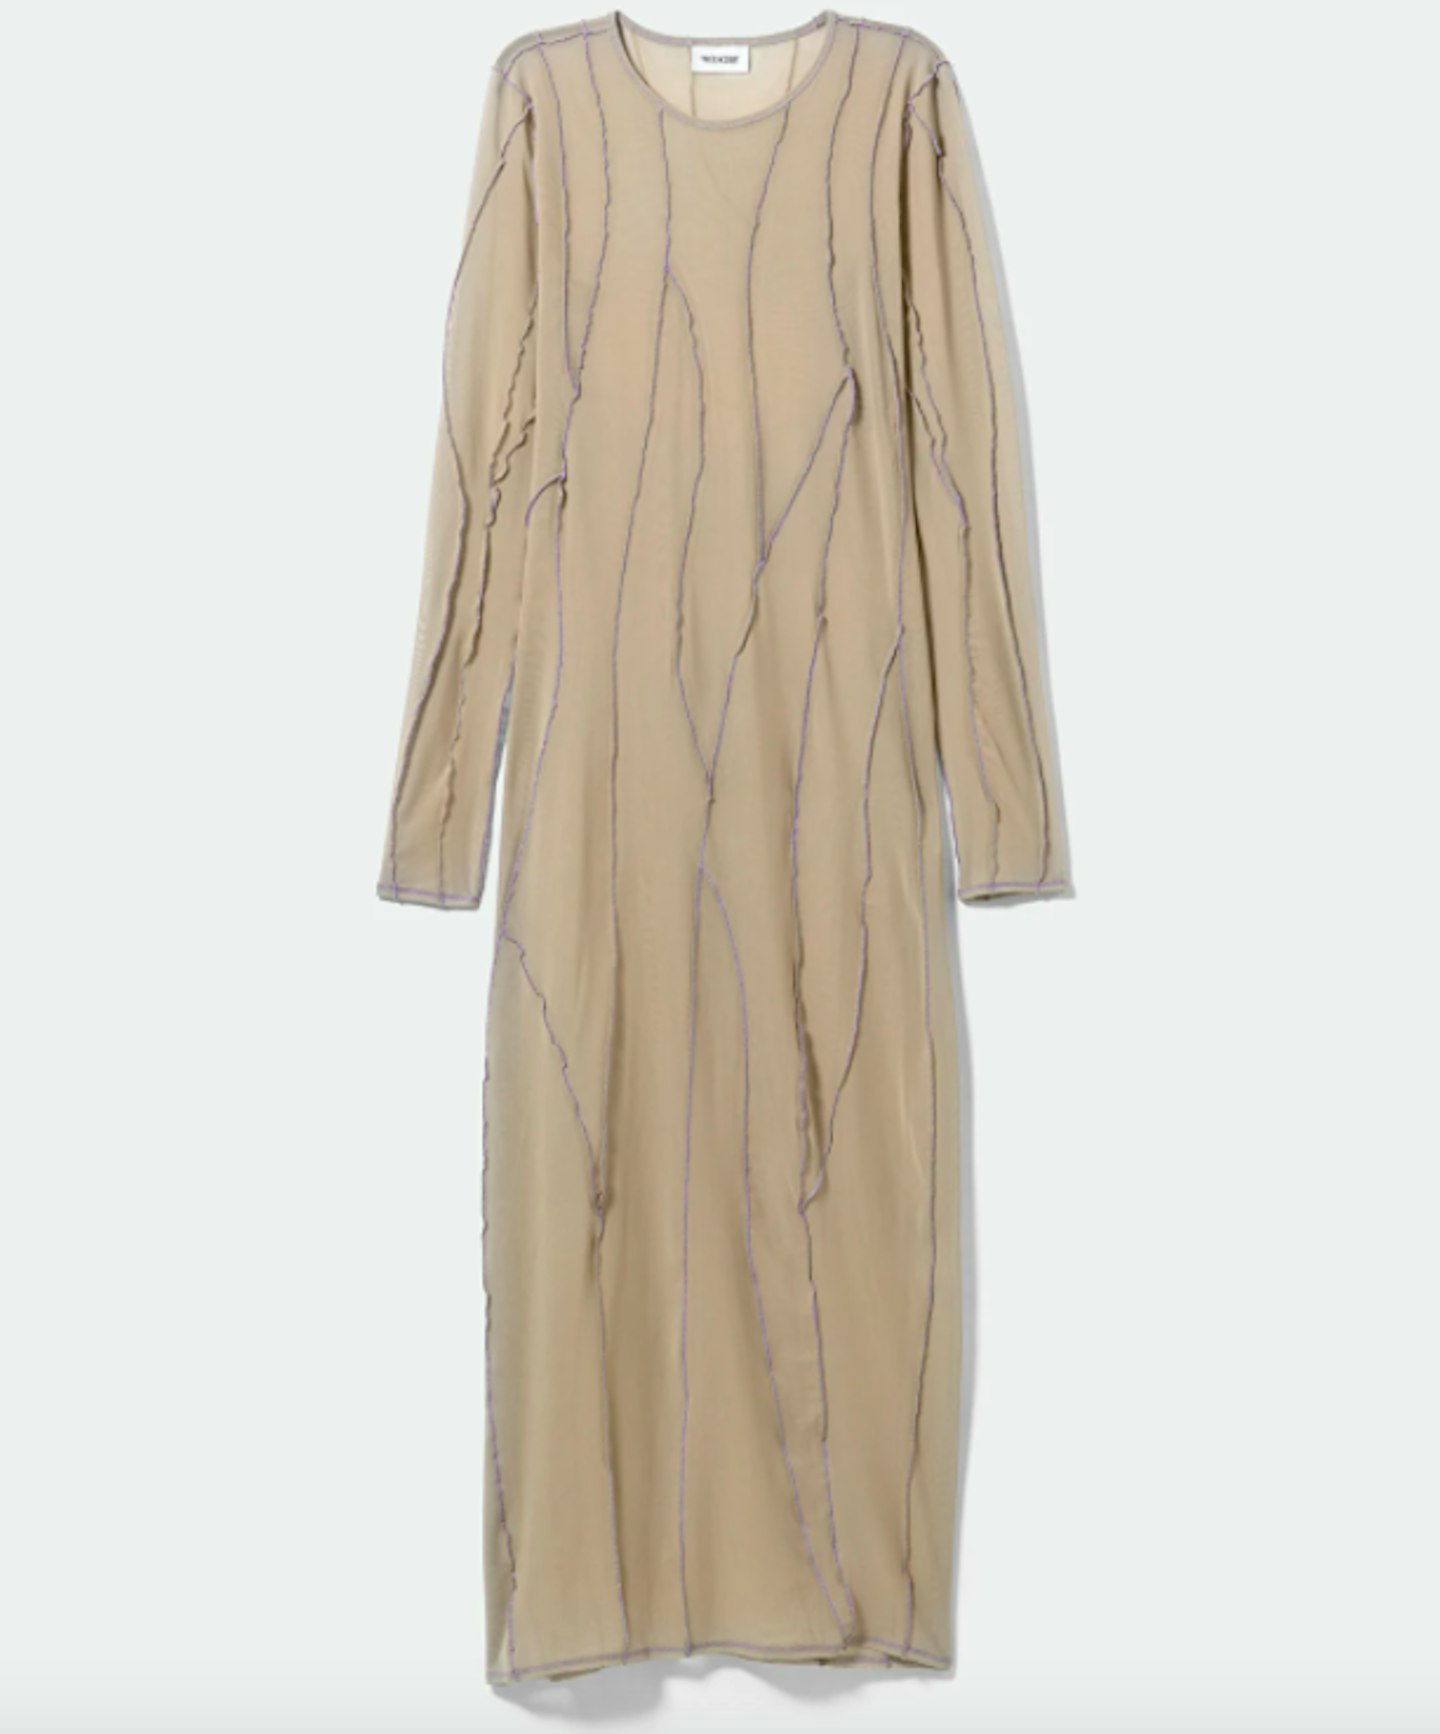 Weekday, Shae Jersey Mesh Dress, £40